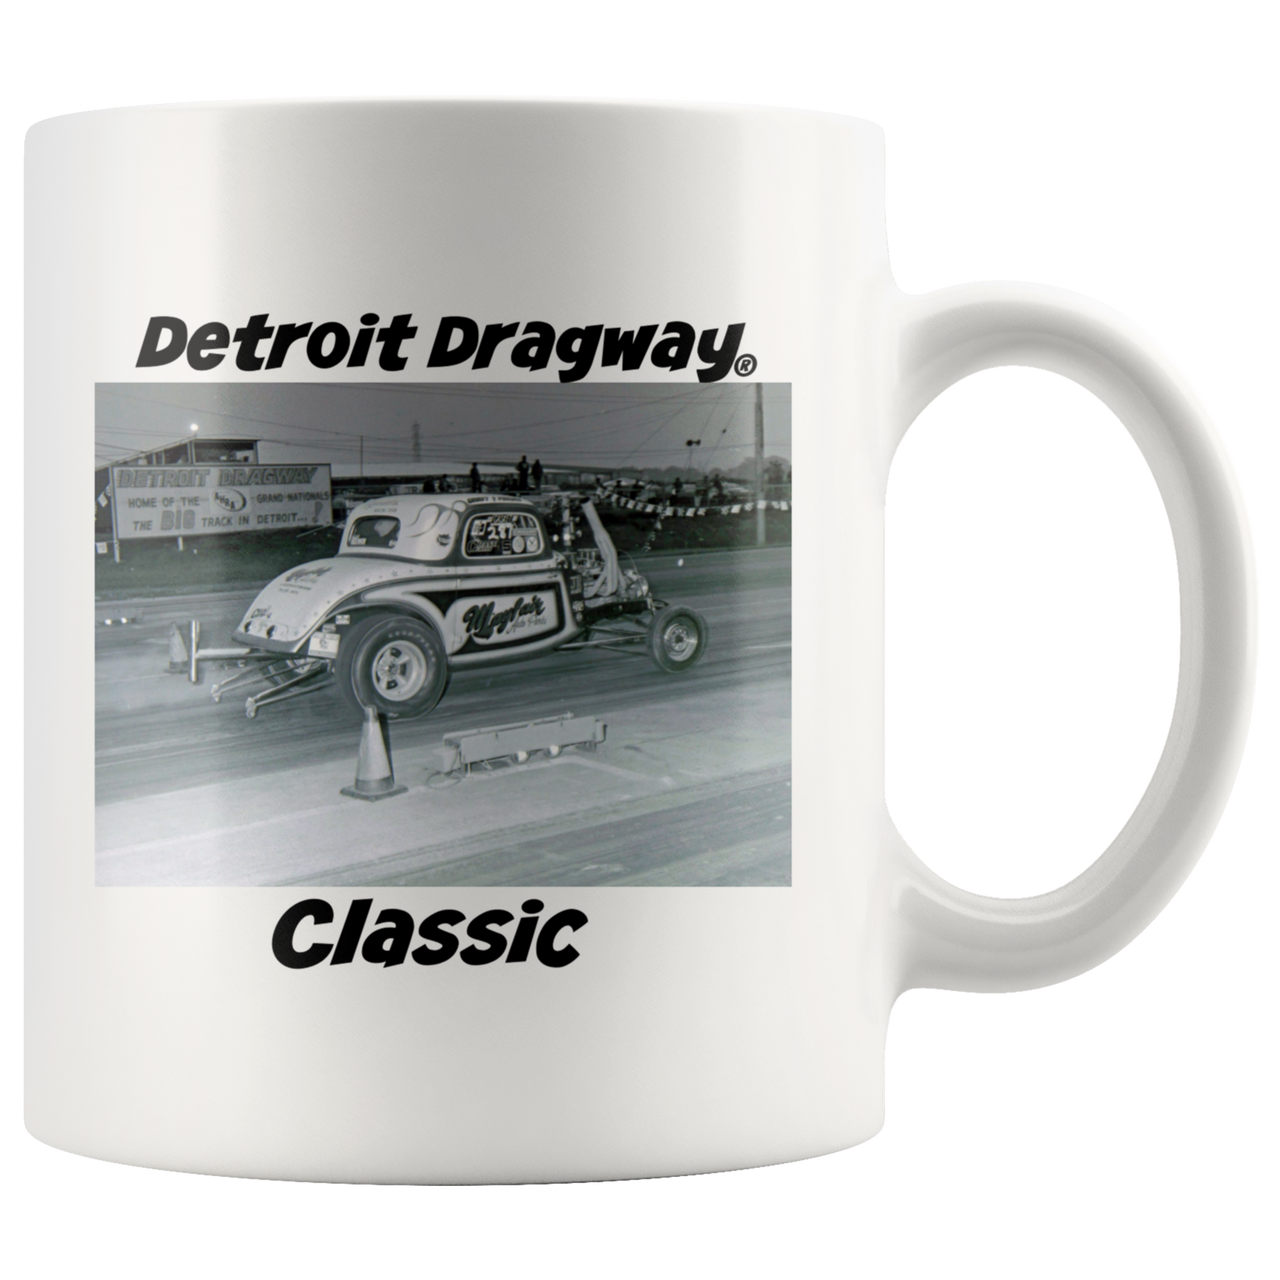 Detroit Dragway® Classic Mayfair